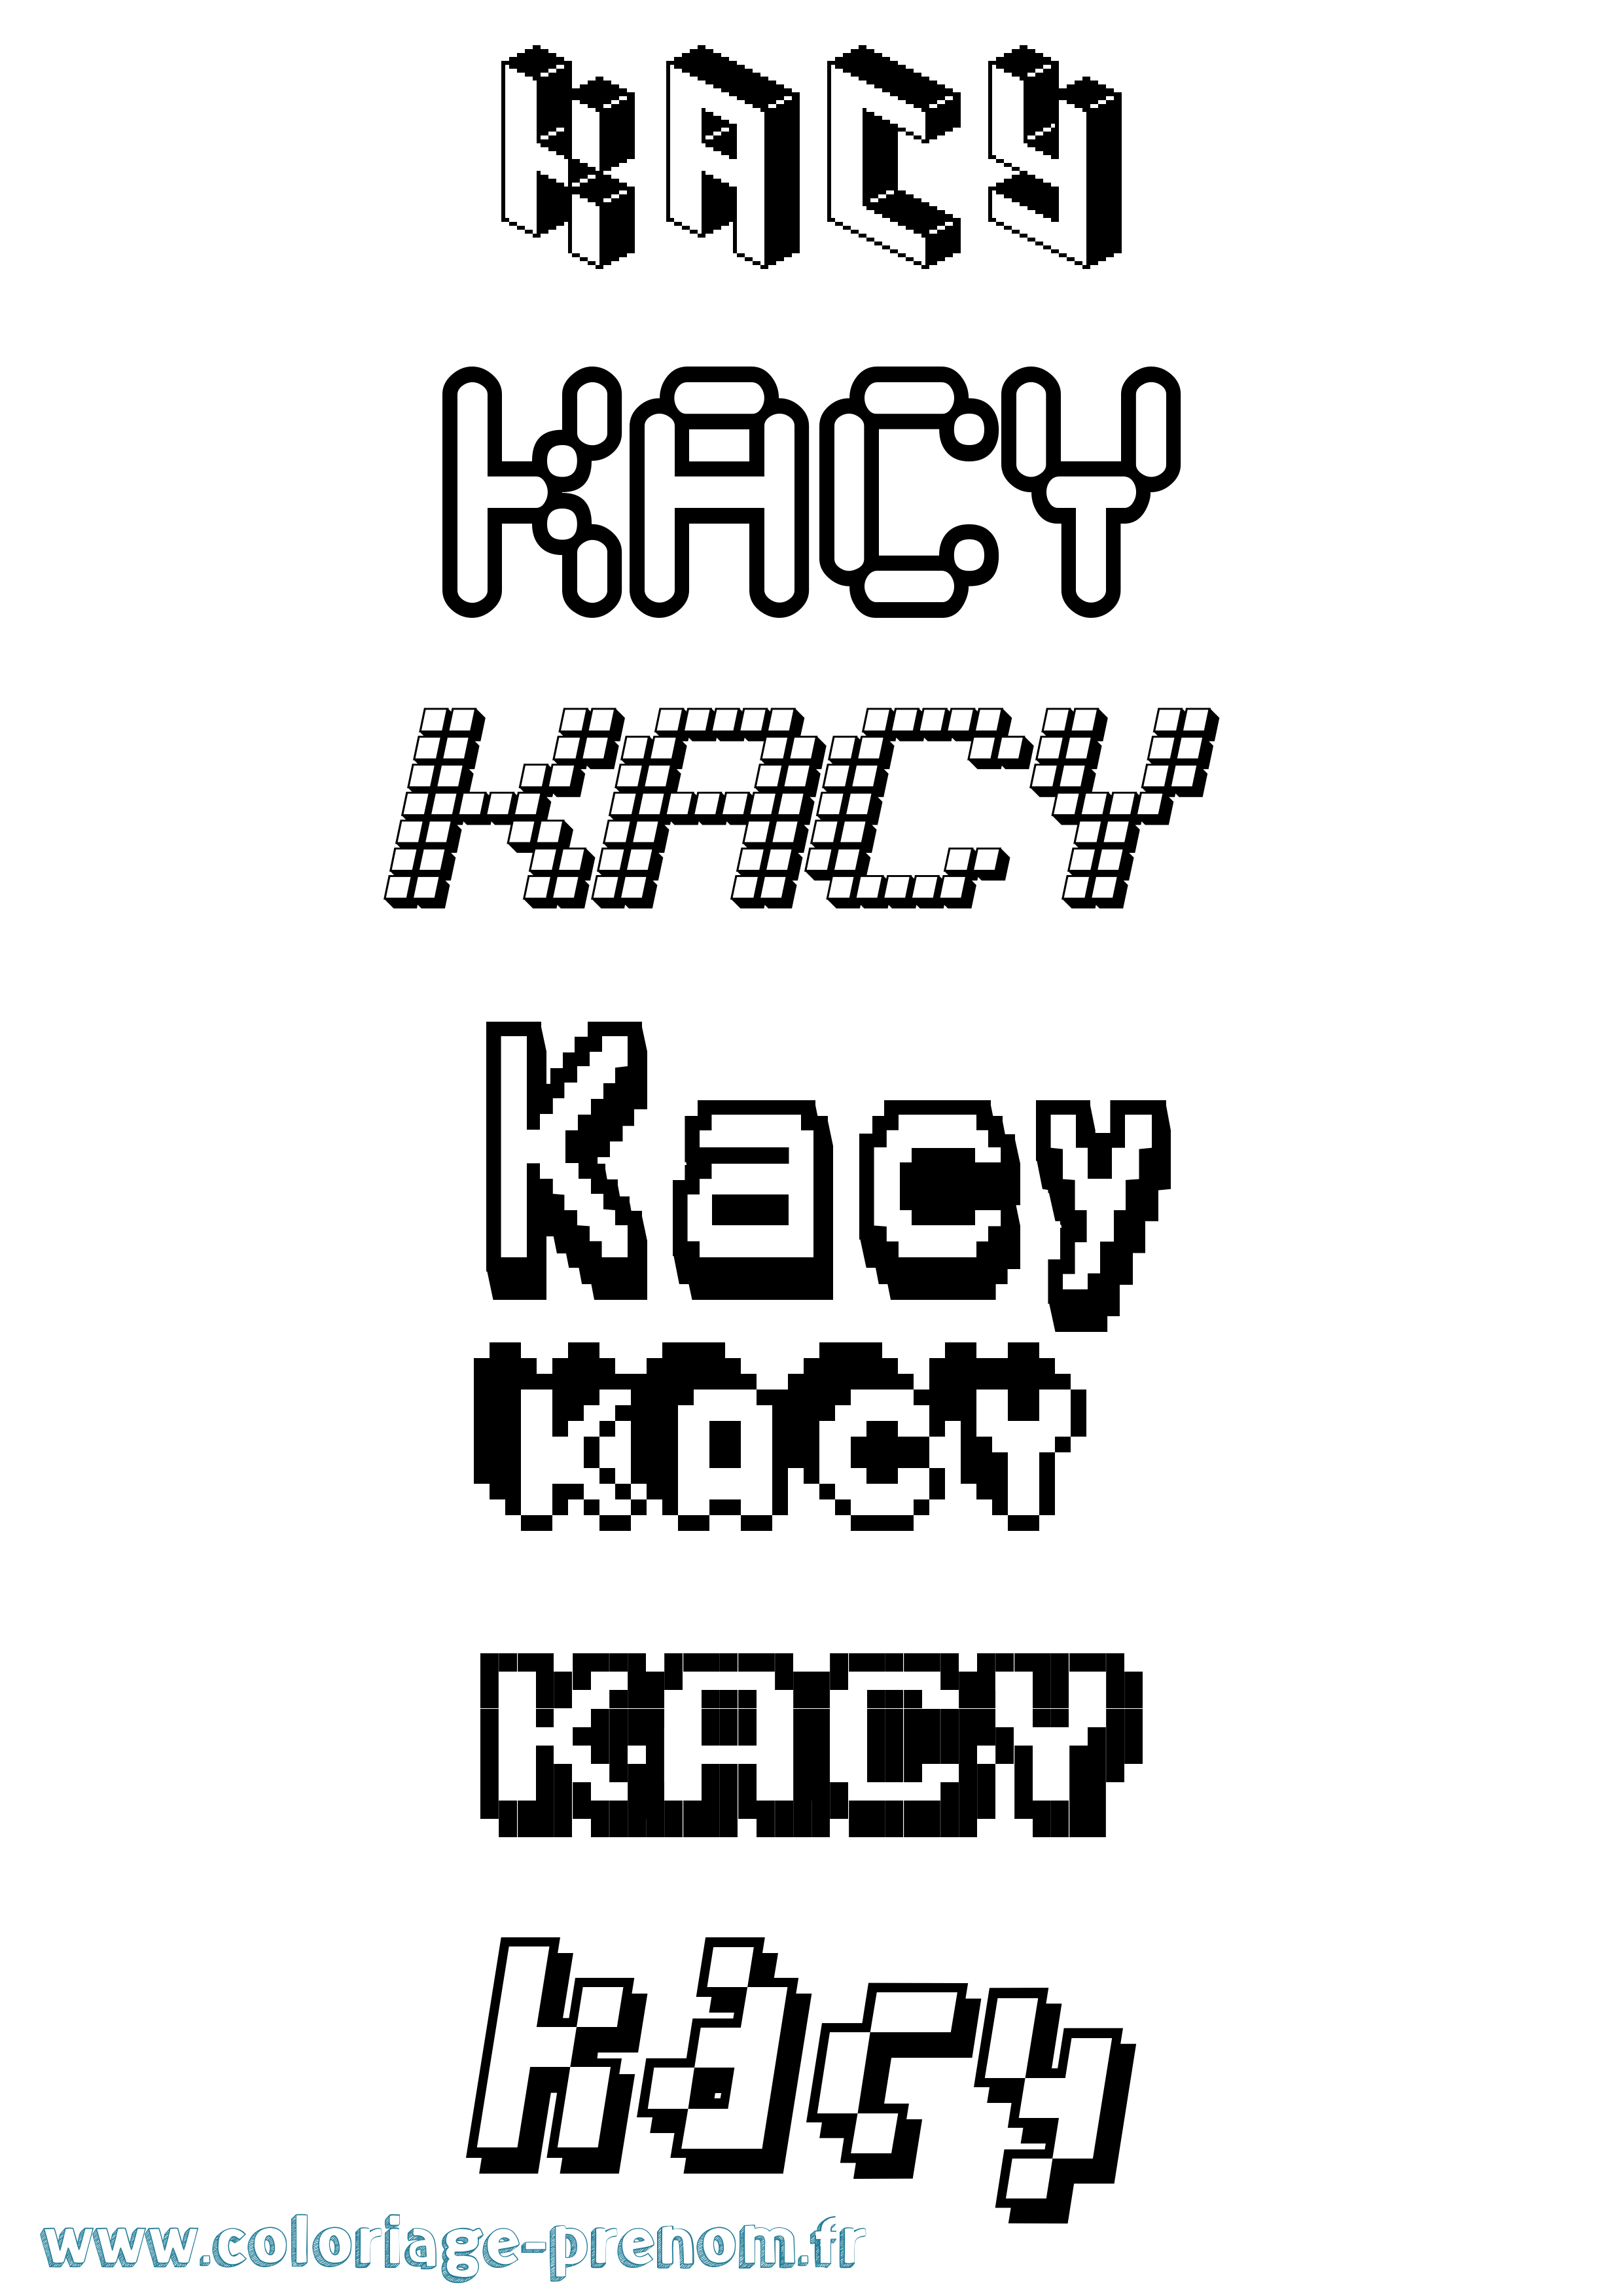 Coloriage prénom Kacy Pixel